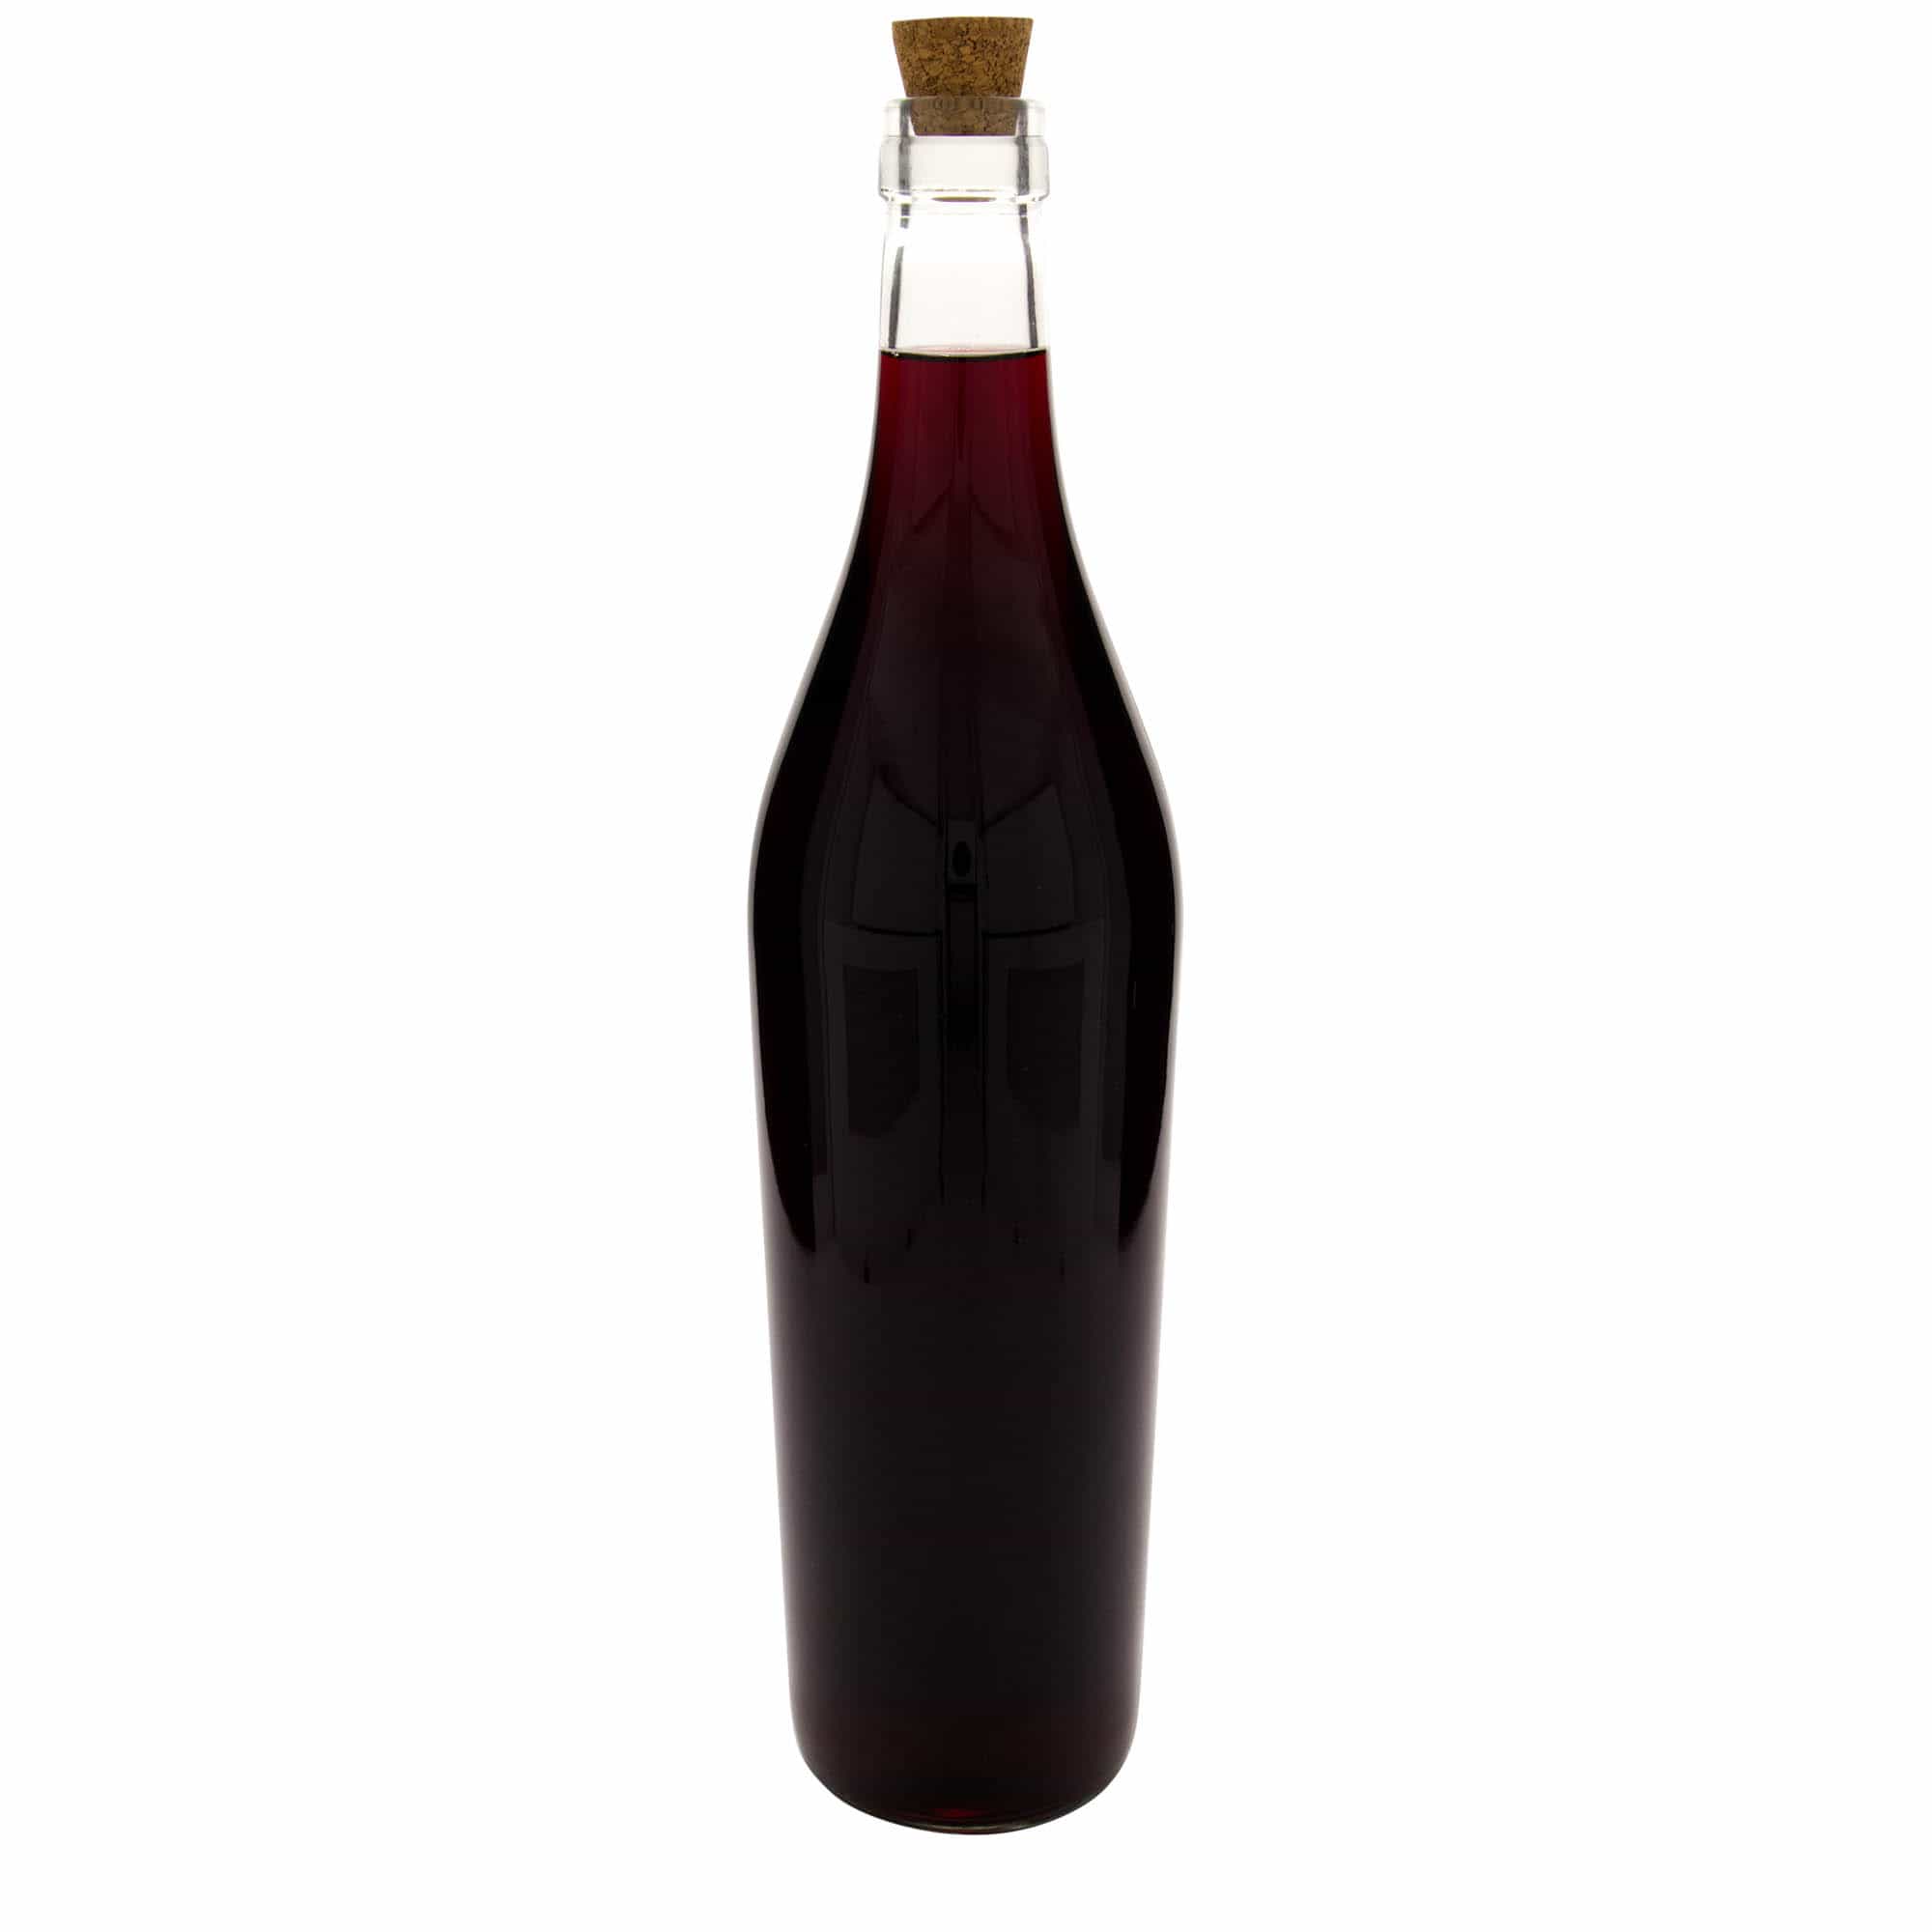 3,000 ml glass bottle 'Big Joe', closure: cork